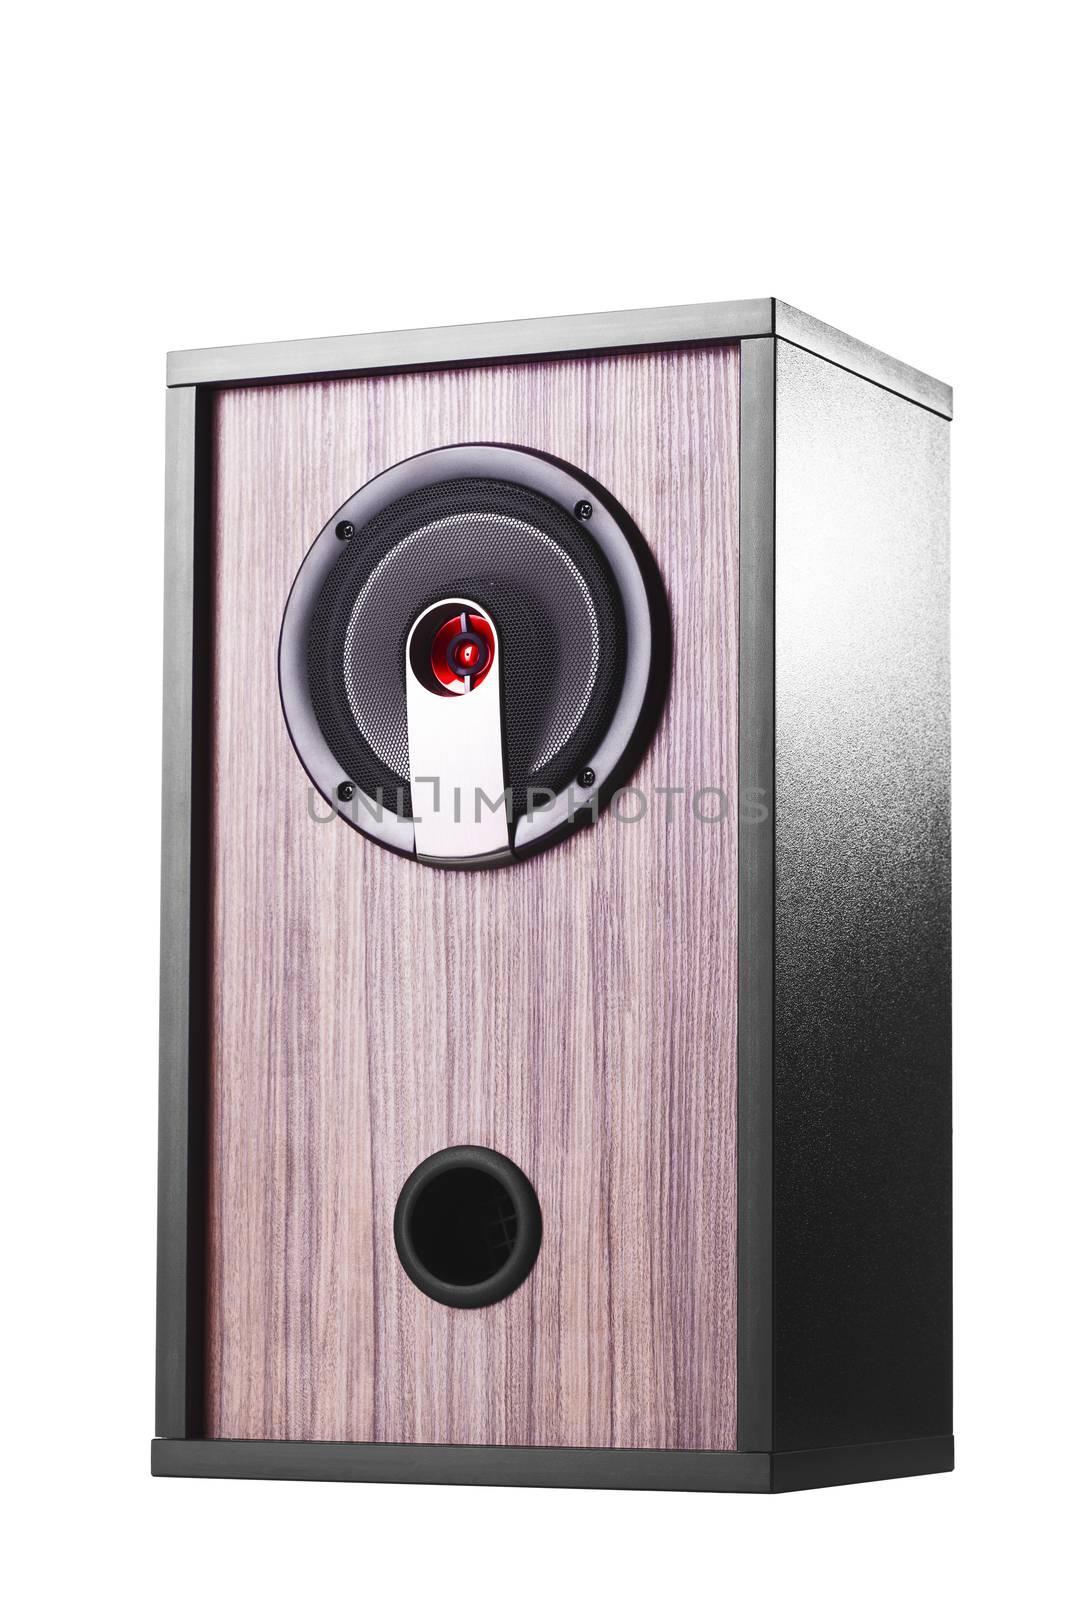 wooden speaker box by kokimk